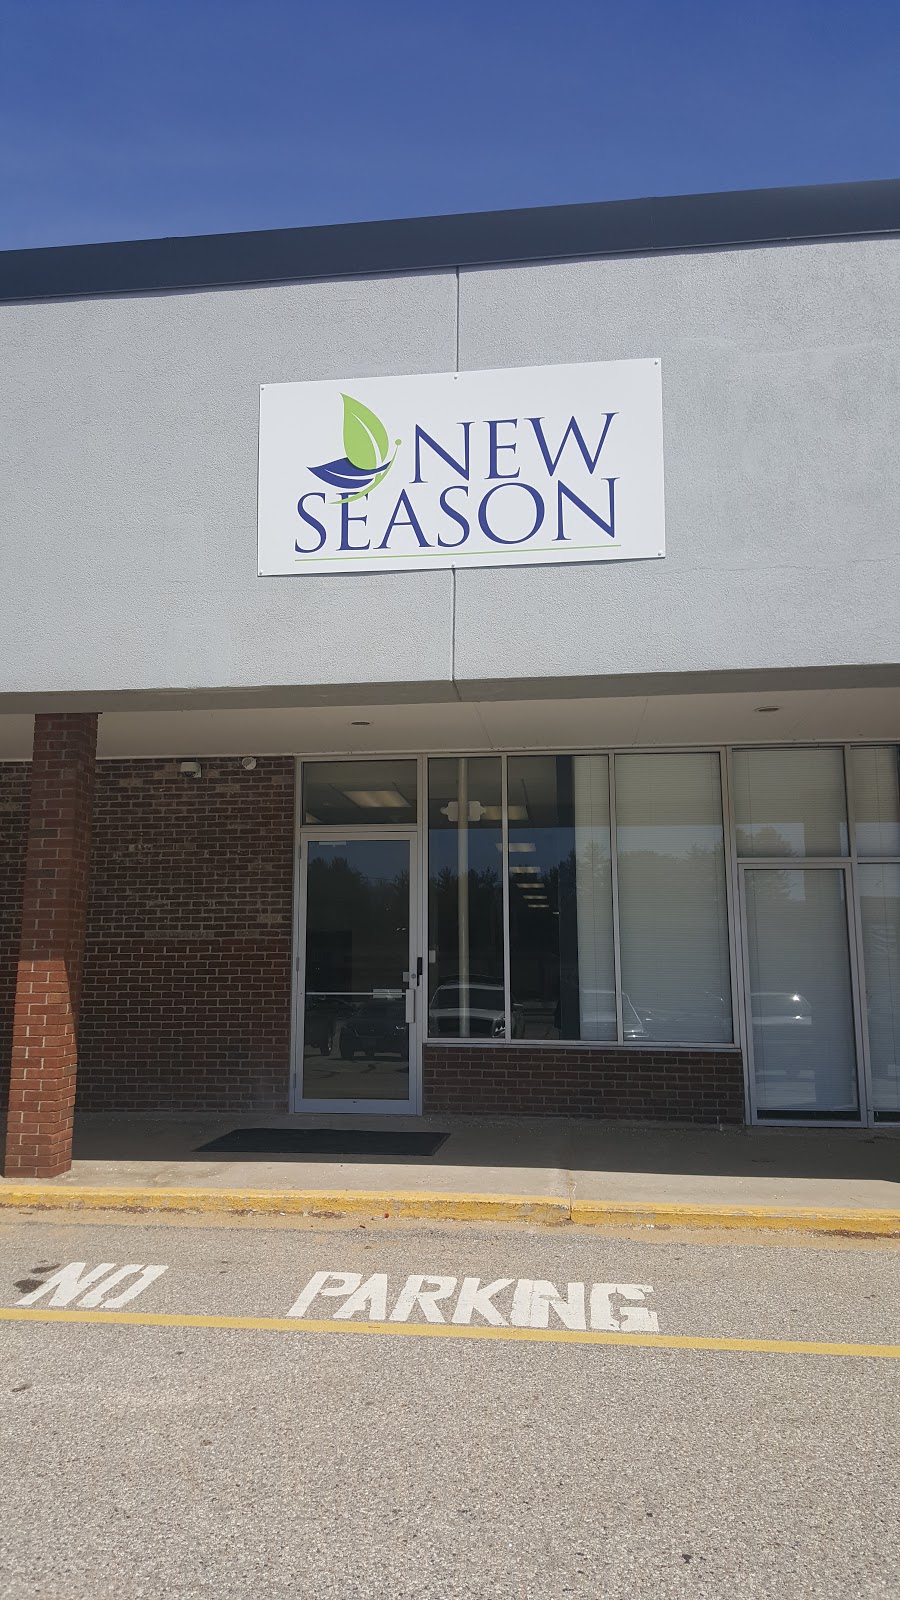 New Season Treatment Center